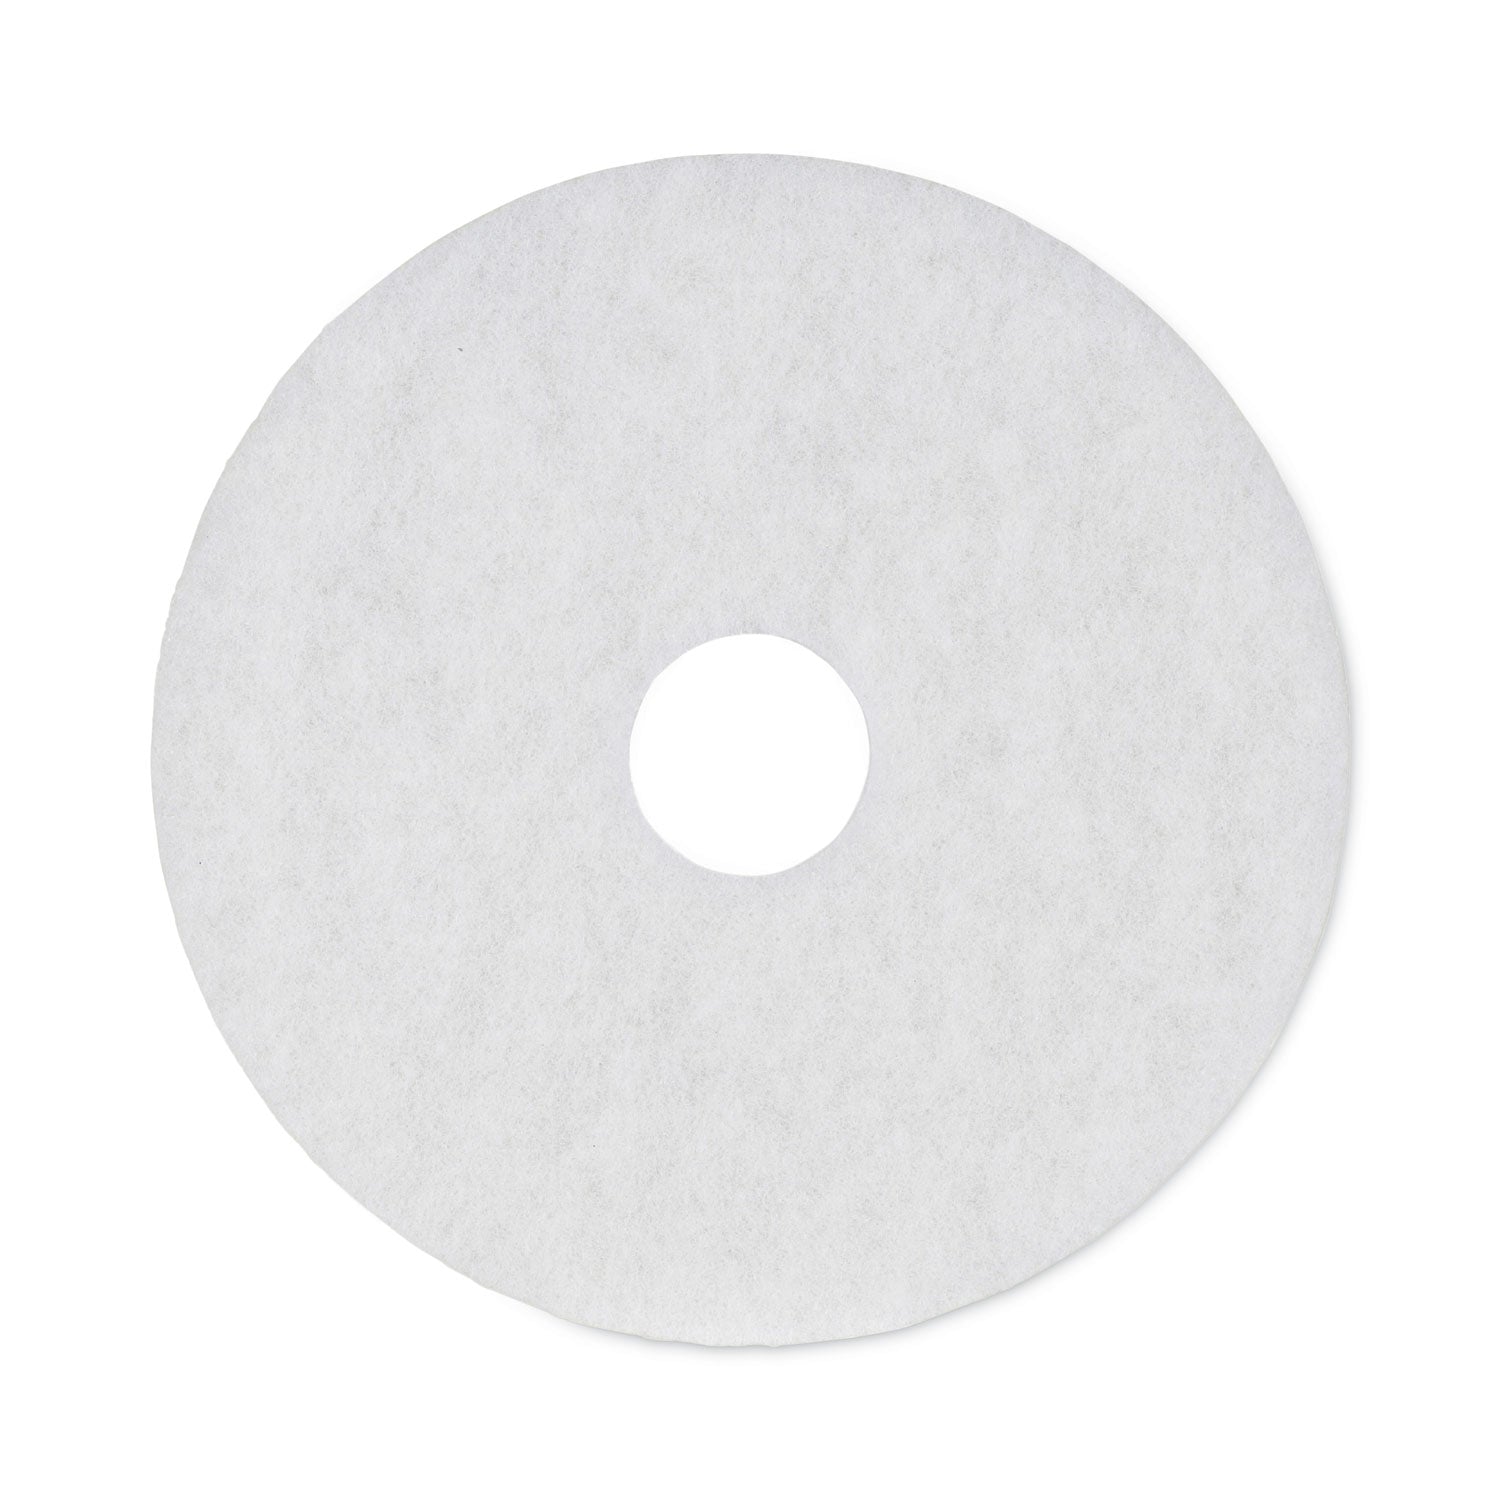 polishing-floor-pads-16-diameter-white-5-carton_bwk4016whi - 1